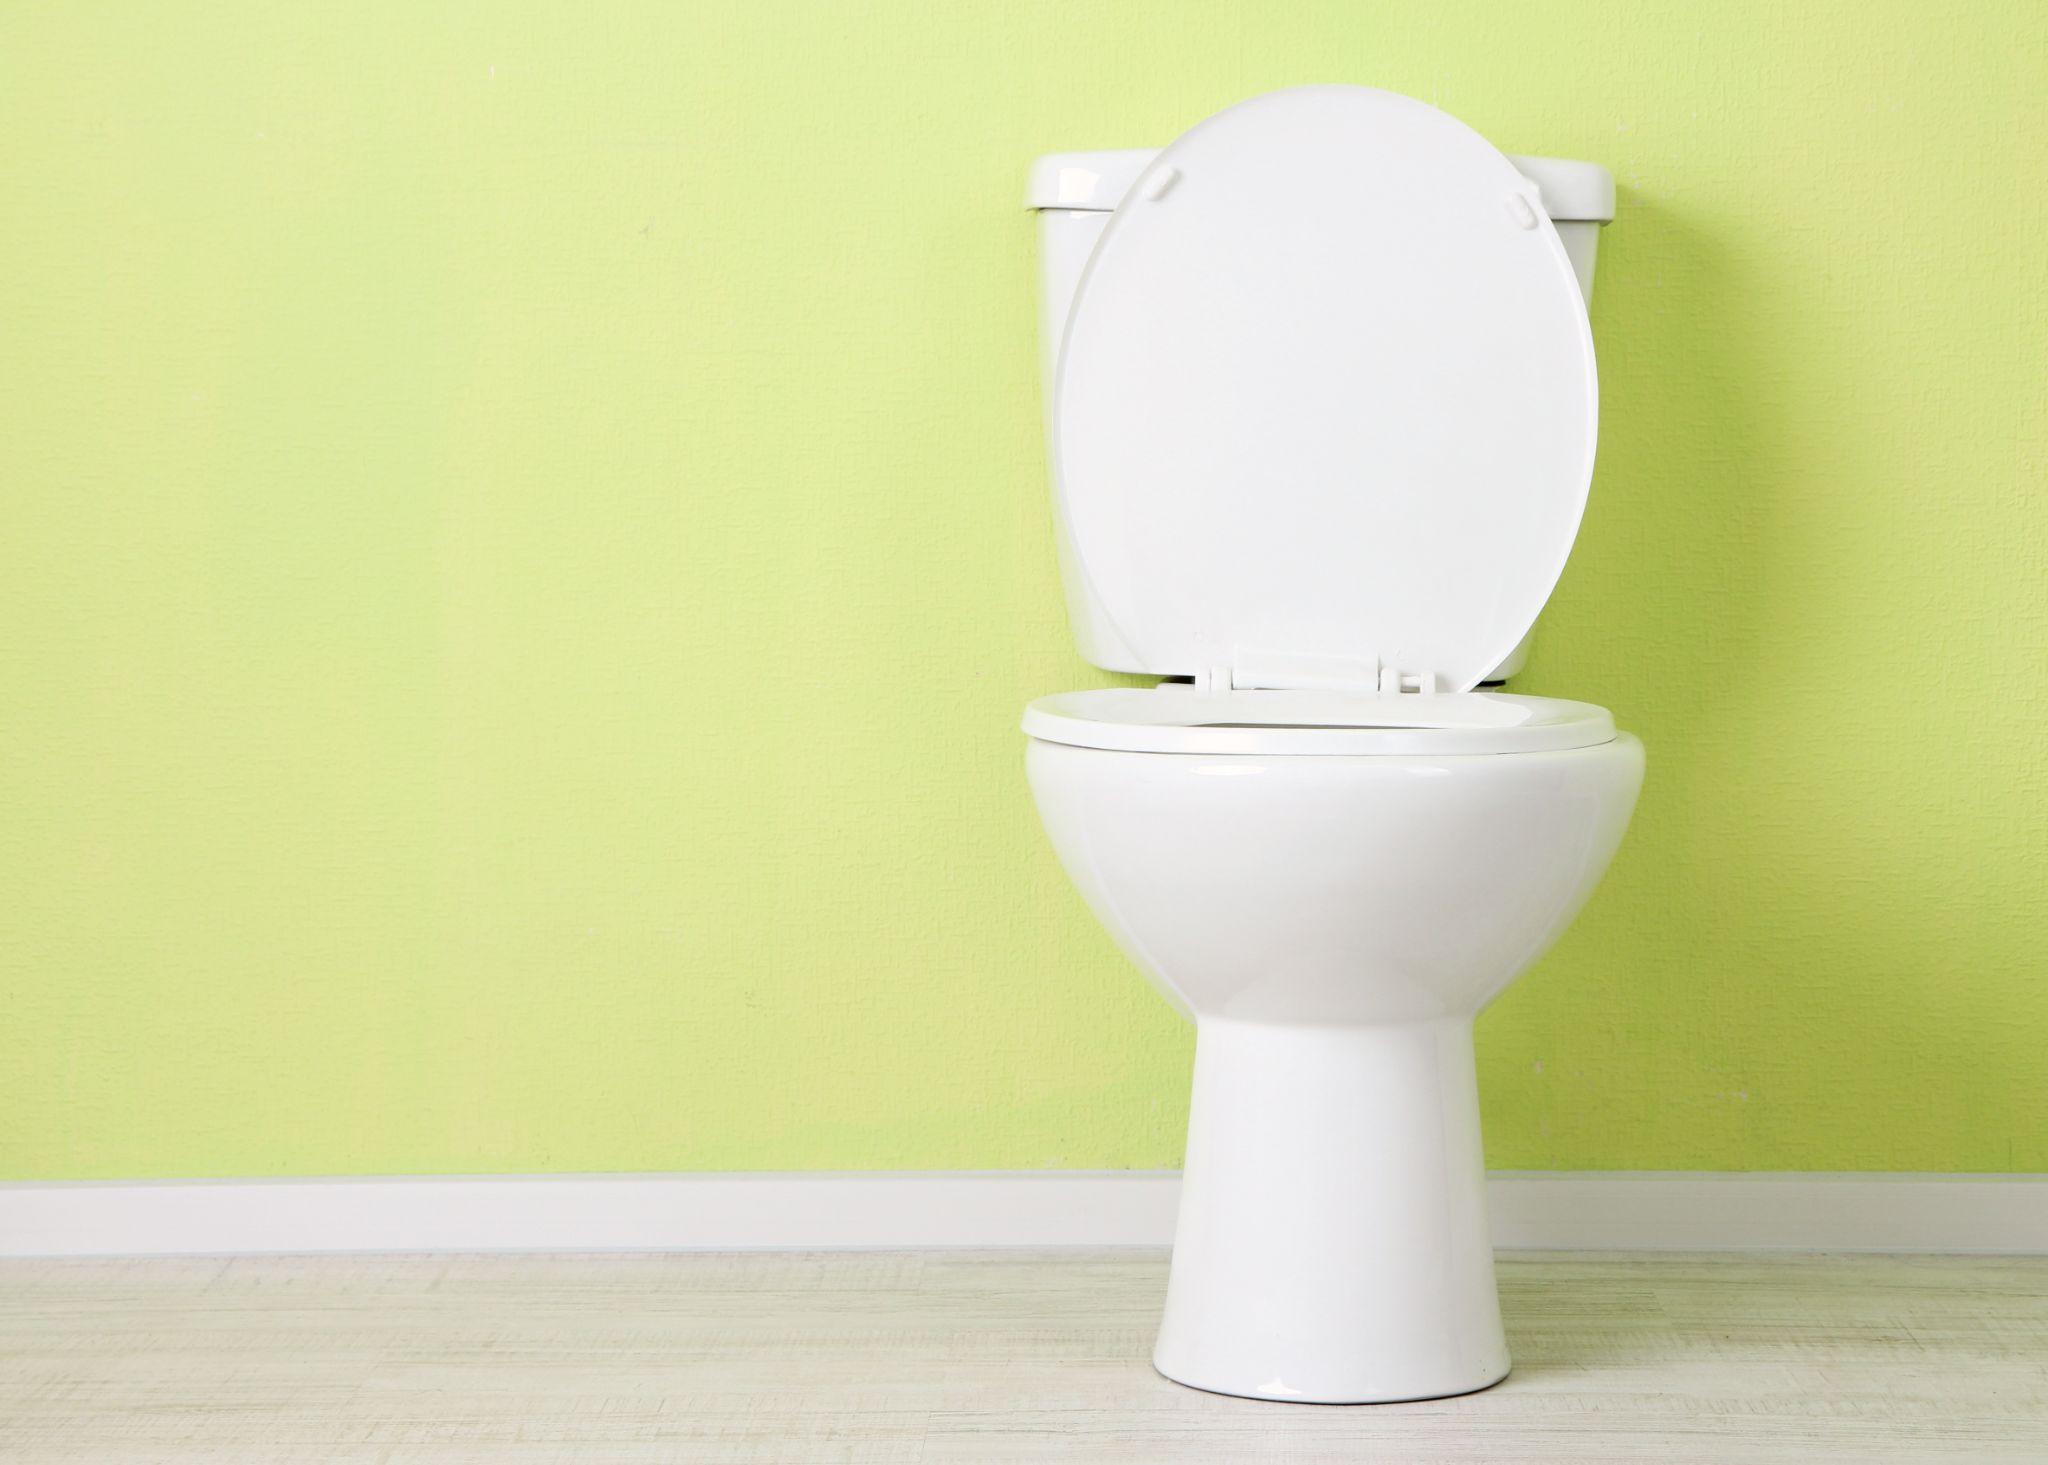 https://www.christiansonco.com/wp-content/uploads/2022/03/white-toilet-bowl-in-a-bathroom.jpg